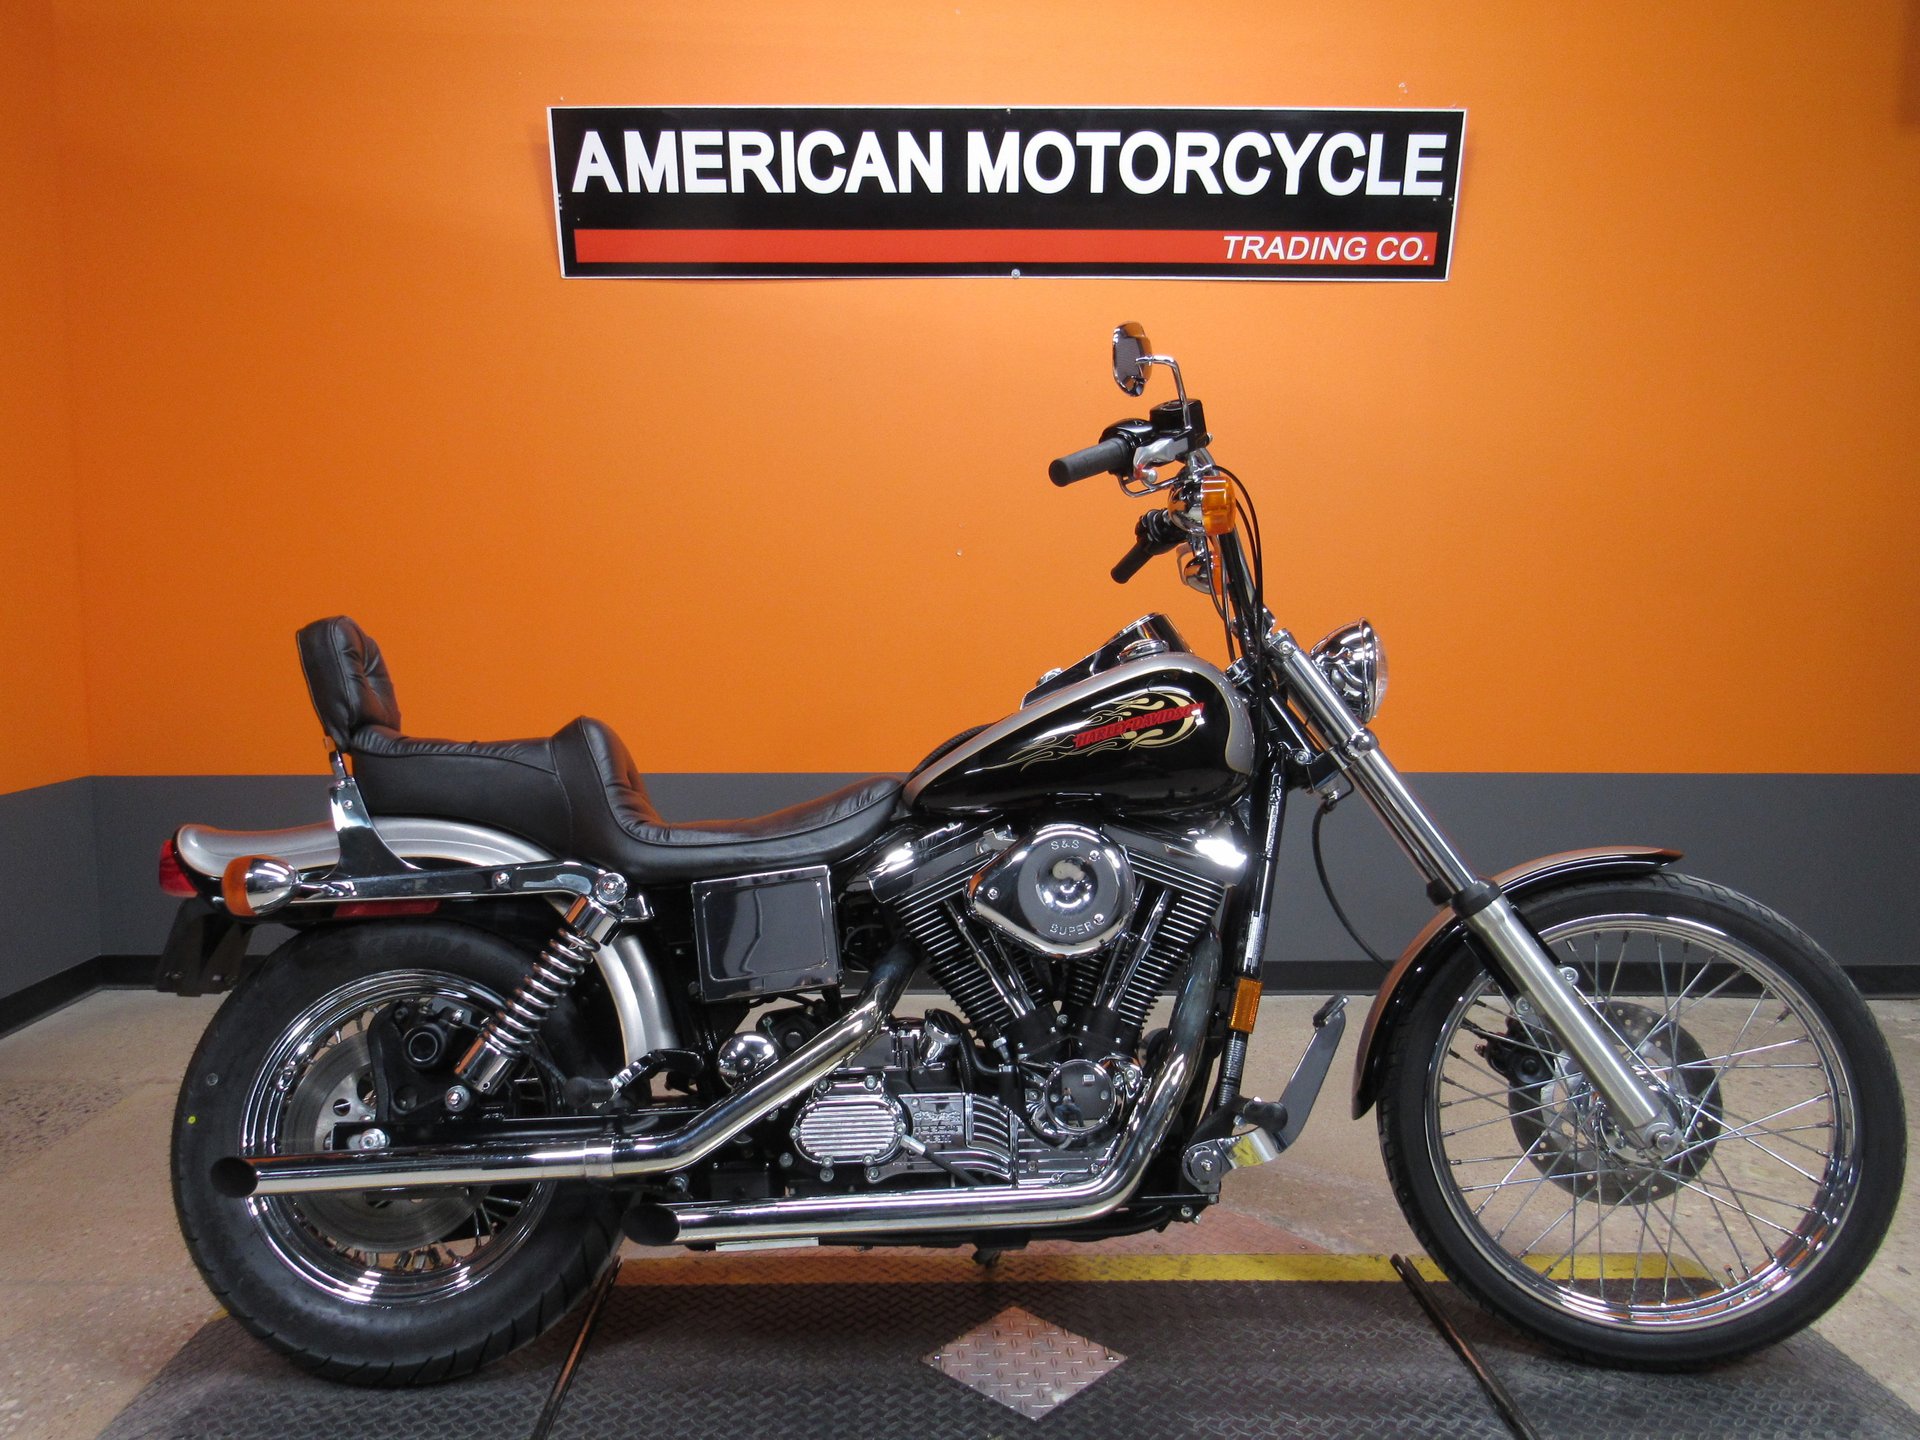 1997 Harley Davidson Dyna Wide Glide American Motorcycle Trading Company Used Harley Davidson Motorcycles